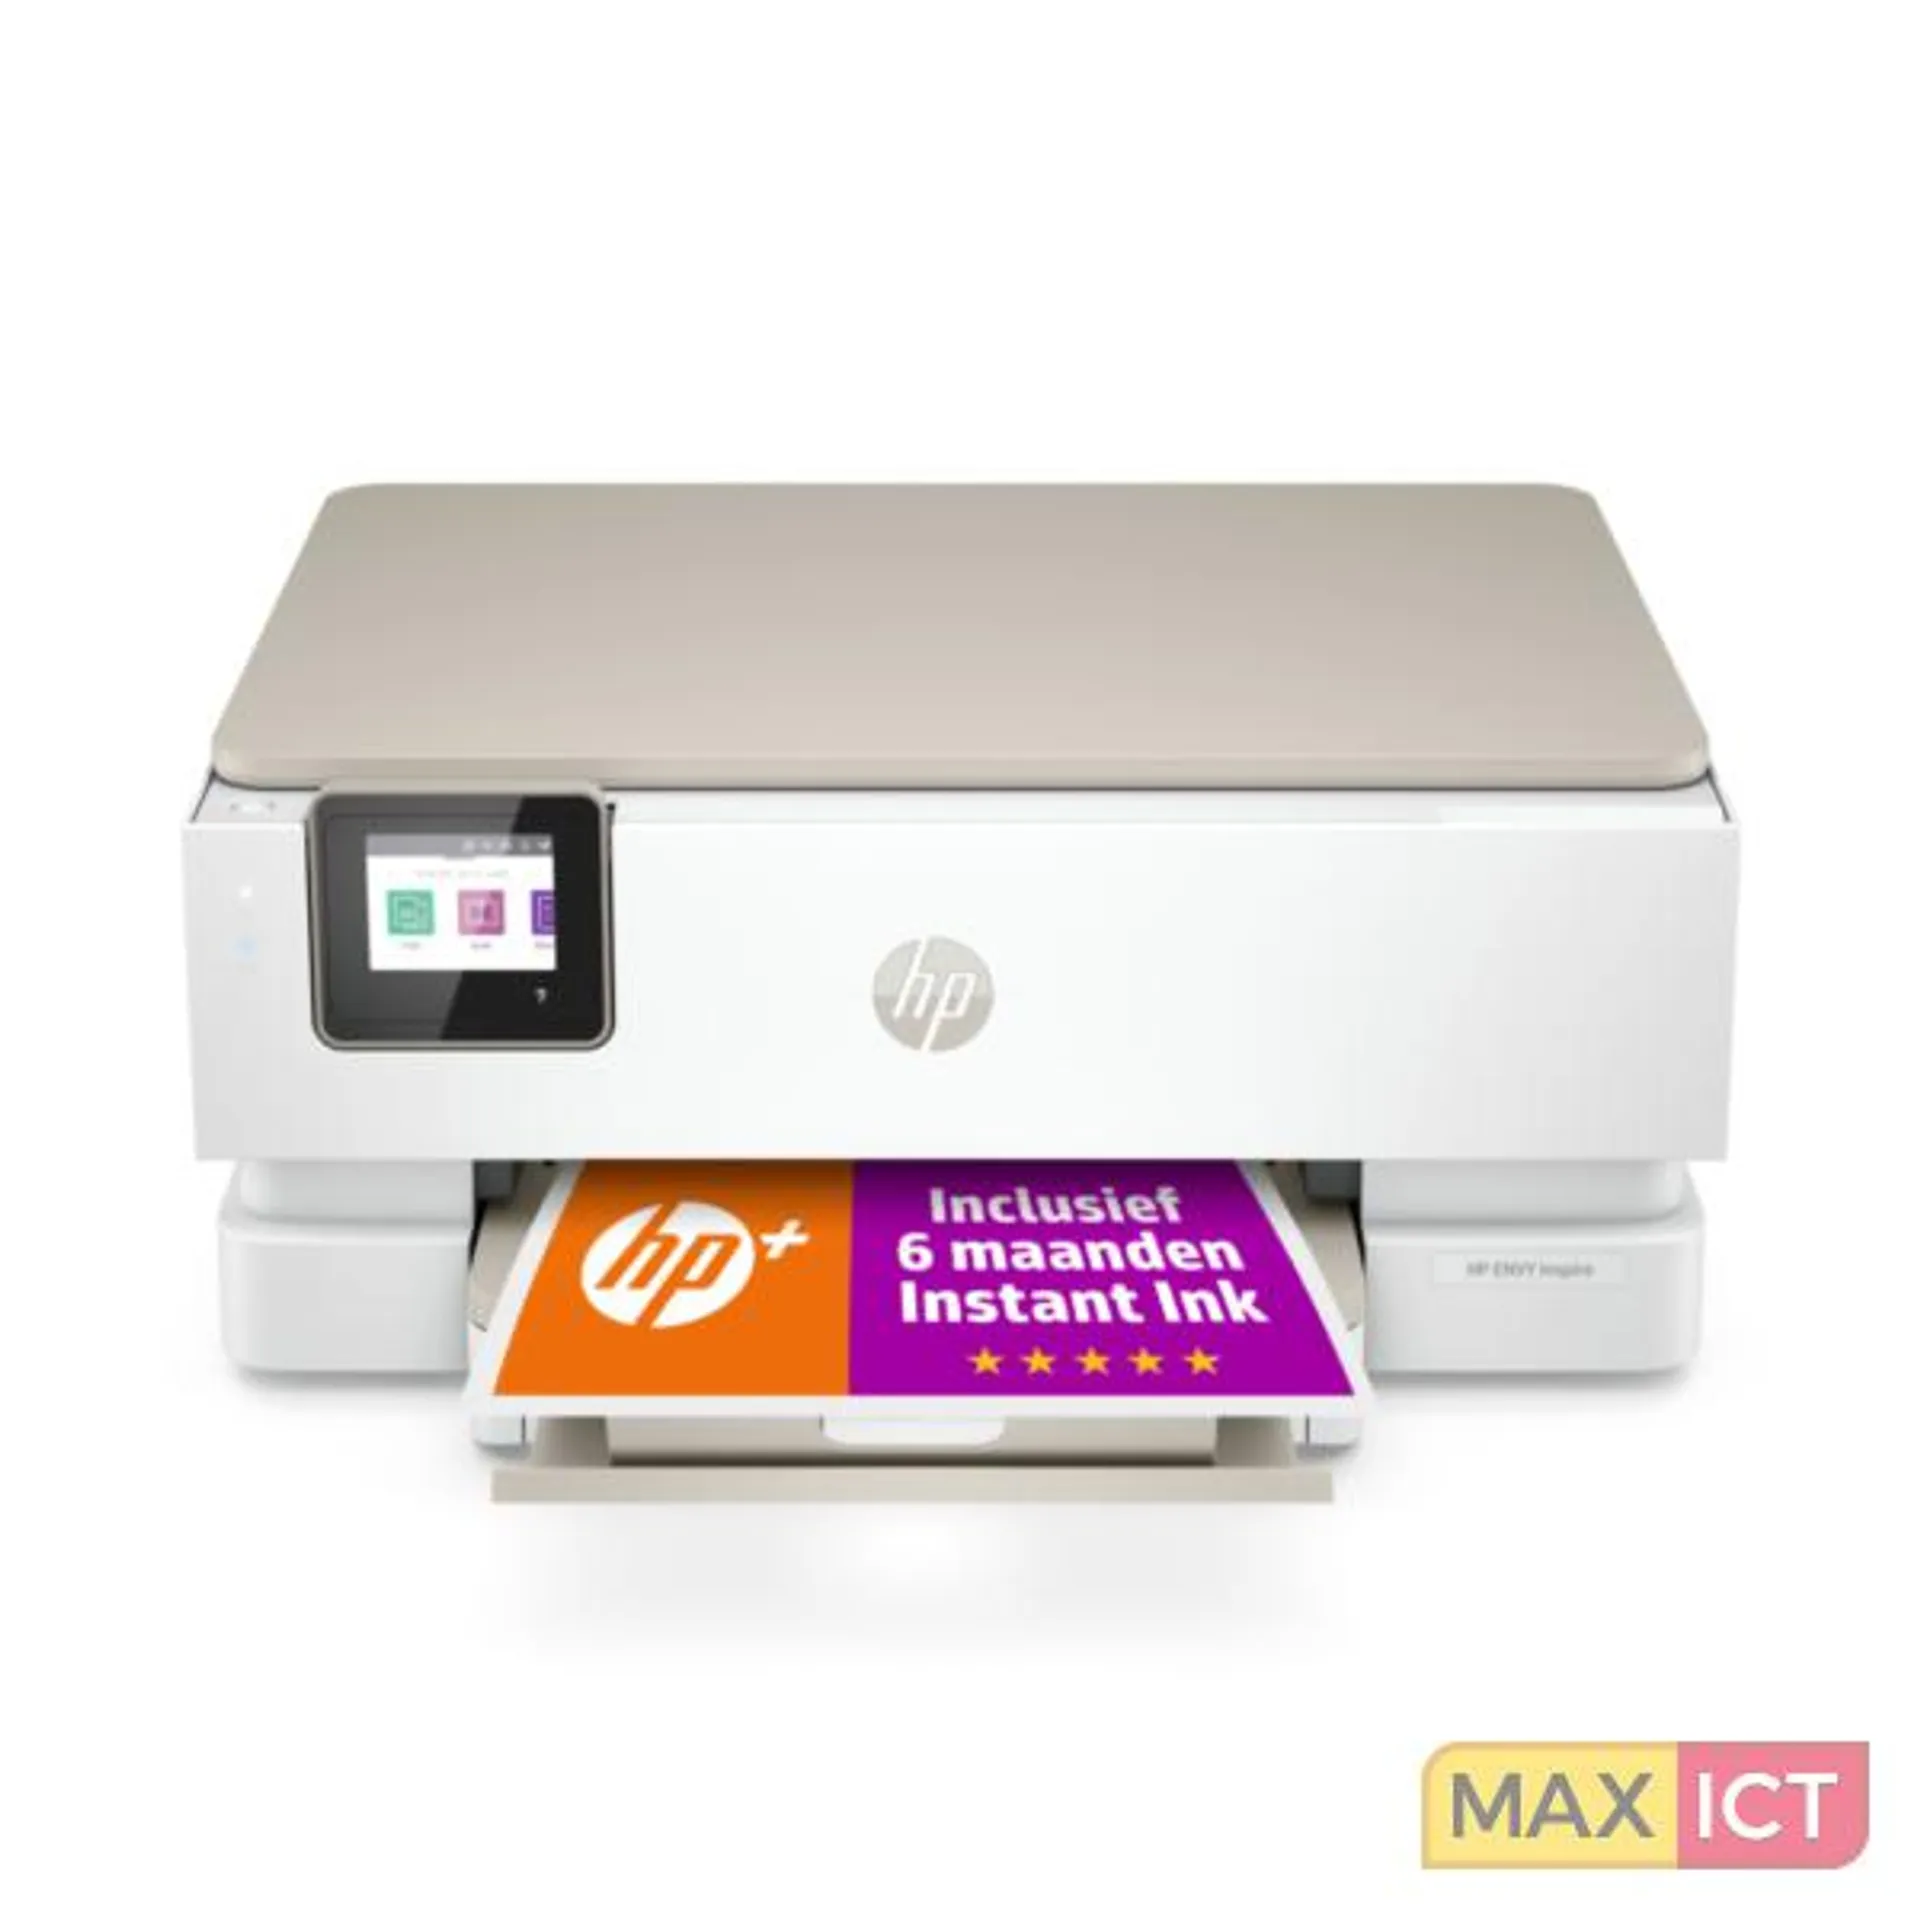 HP ENVY Inspire 7220e All-in-One printer